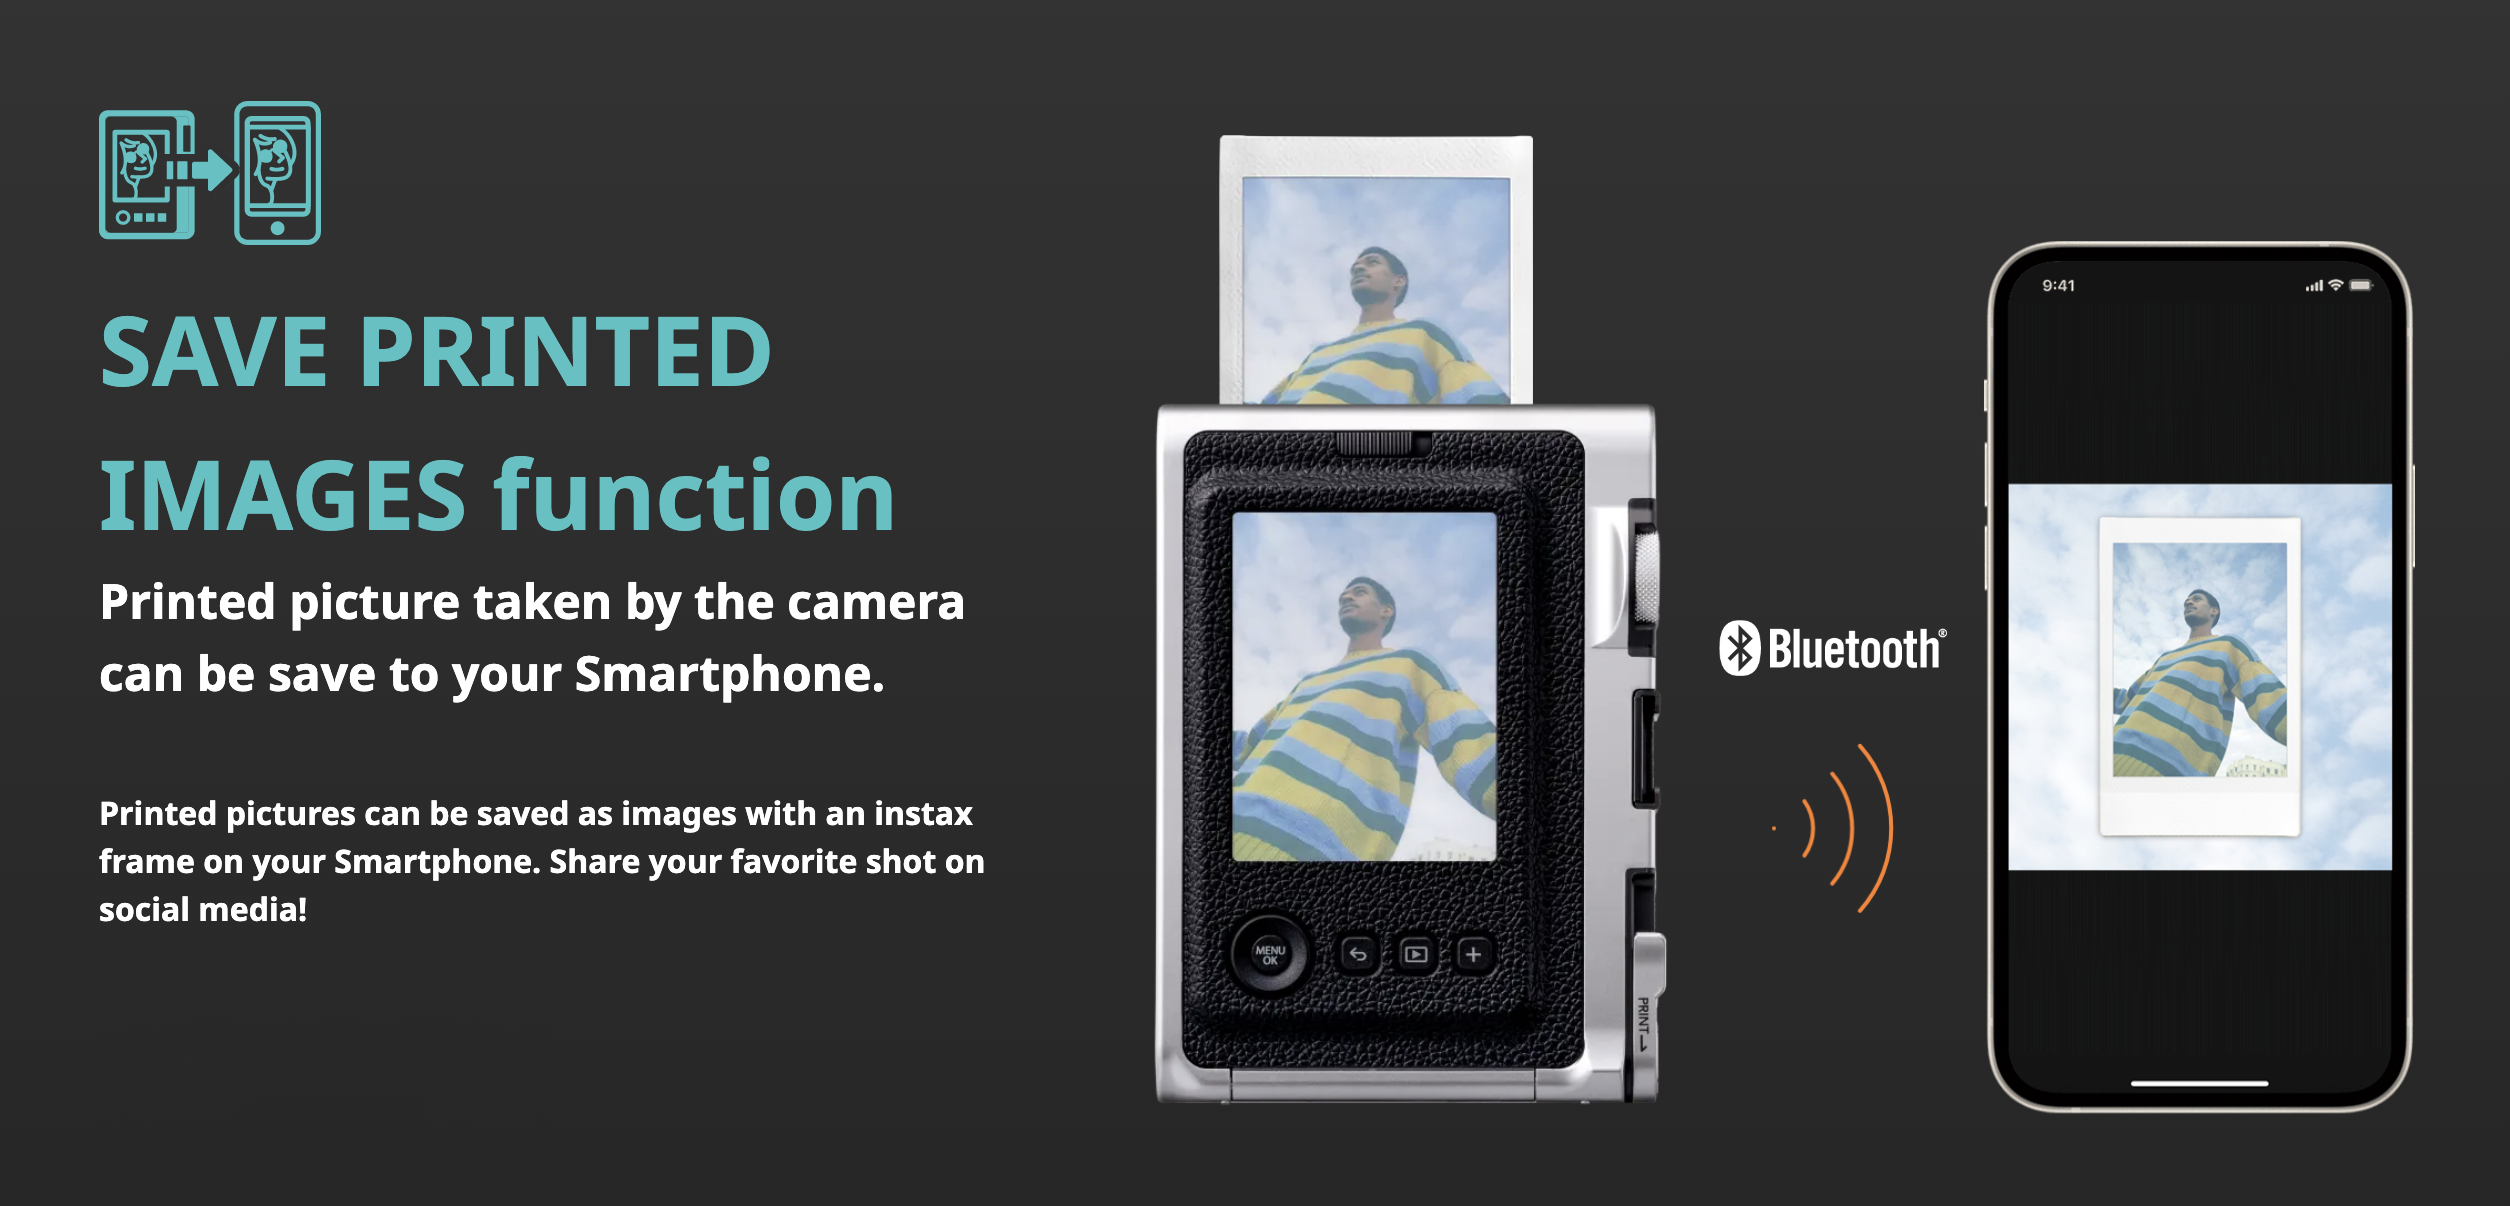 Fujifilm Instax Mini Evo Brown - Urban Gadgets PH